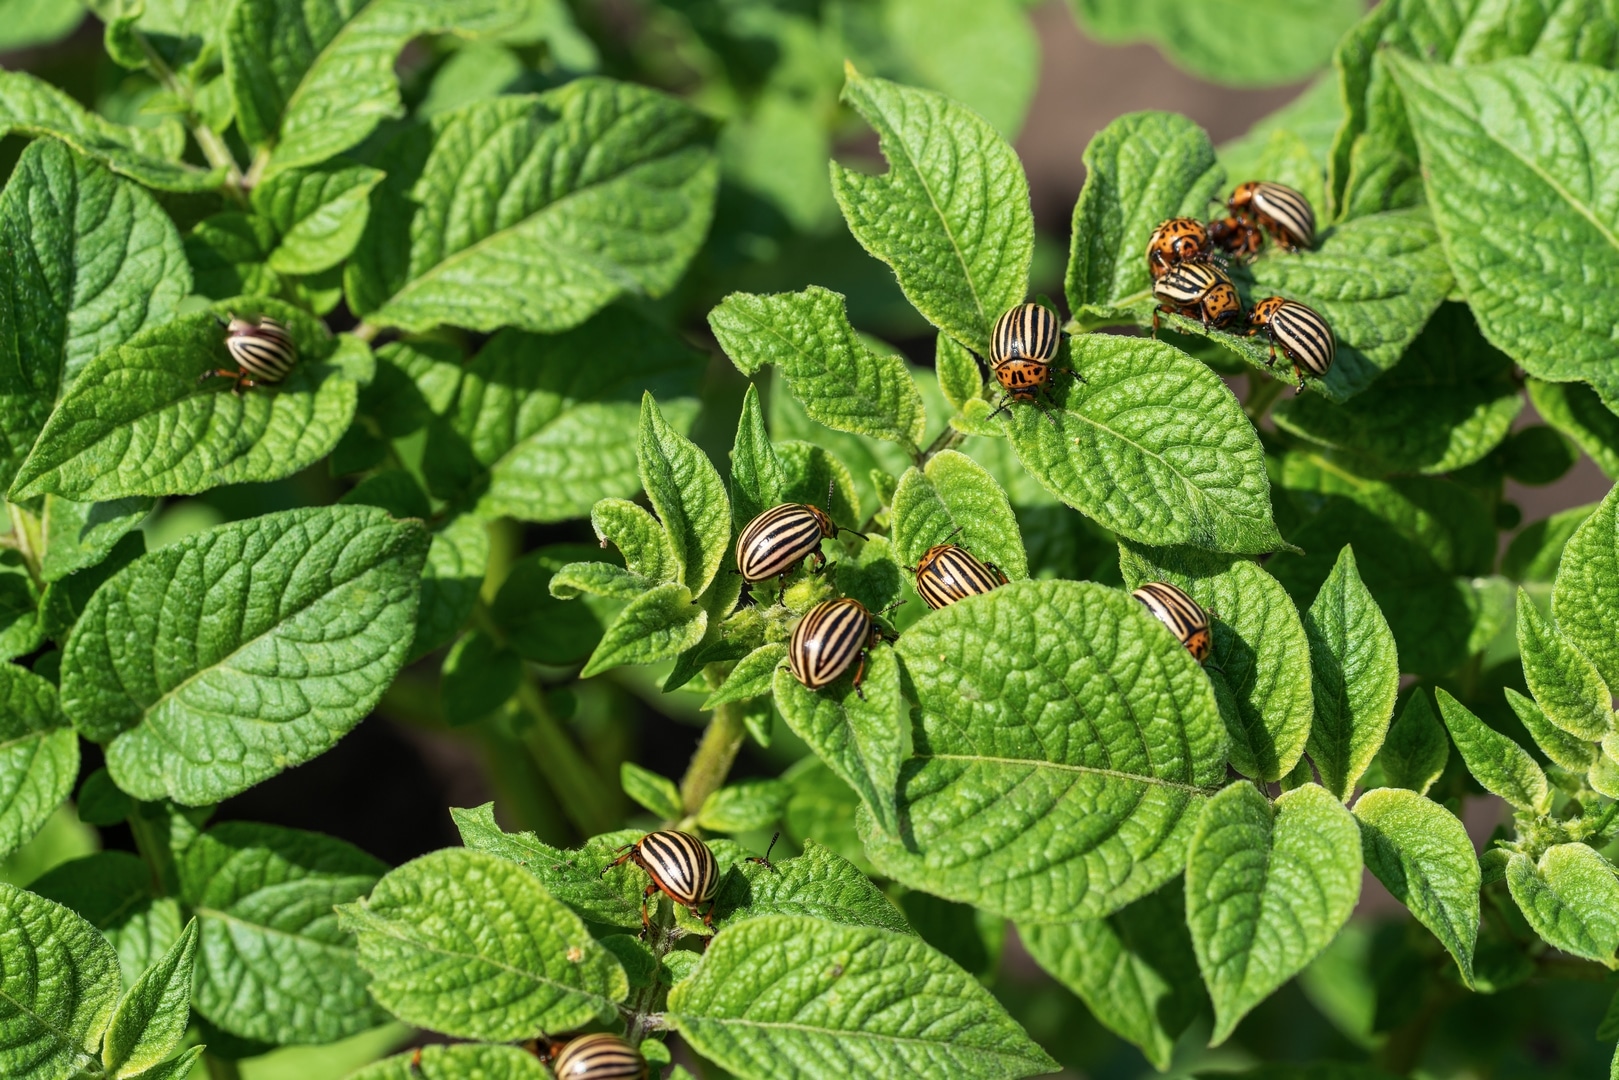 colorado potato beetle eats potato leaves agricultural insects pests Copiar